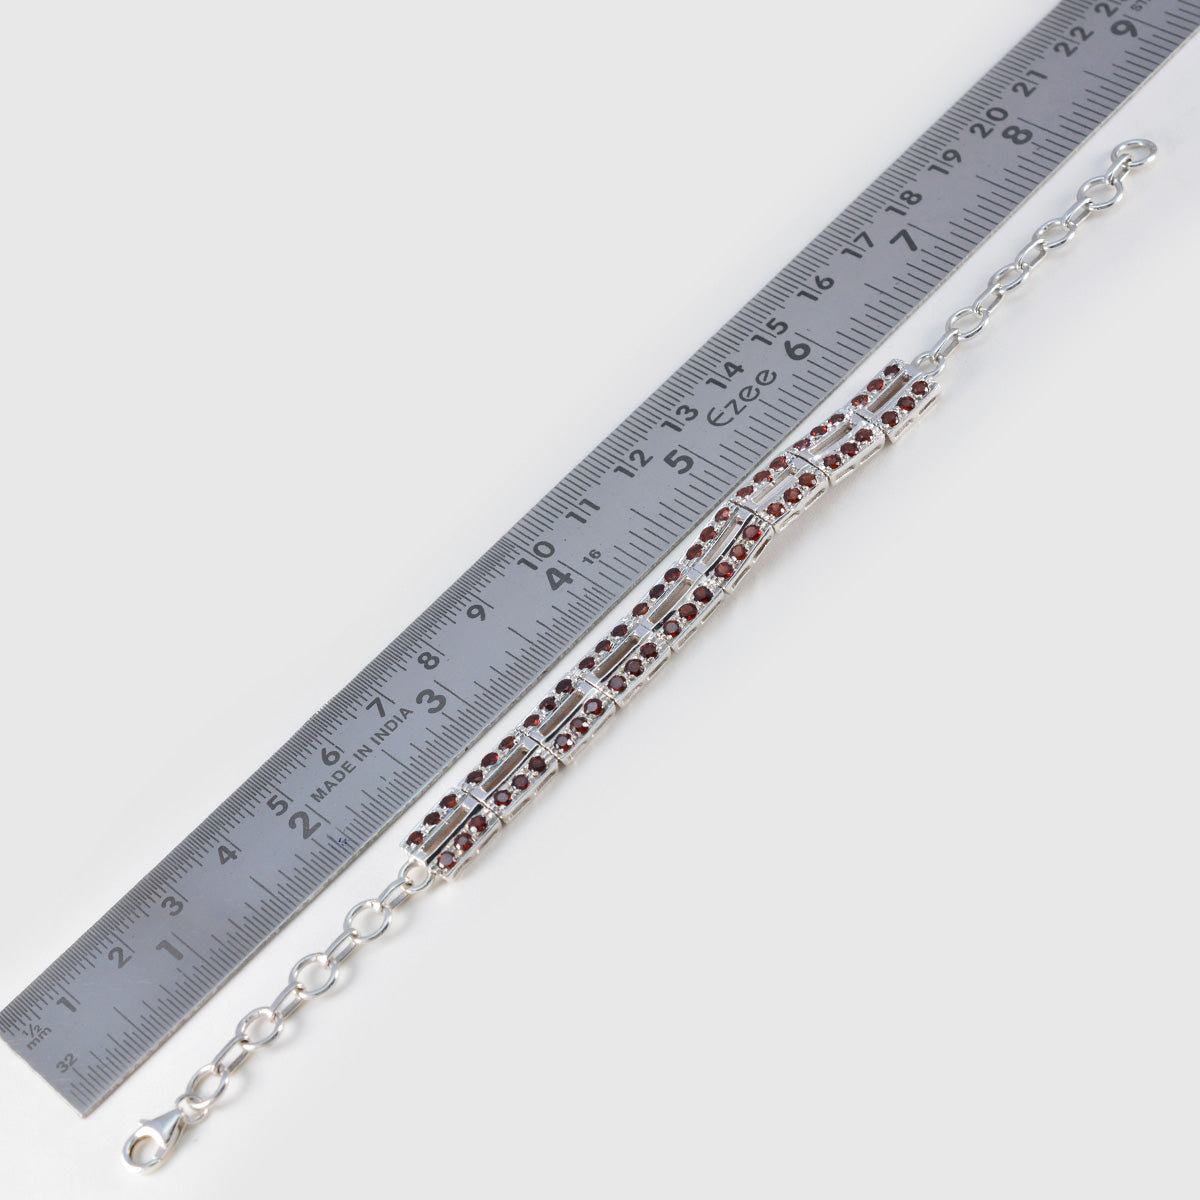 Riyo Gorgeous 925 Sterling Silver Bracelet For Women Garnet Bracelet Prong Setting Bracelet with Fish Hook Link Bracelet L Size 6-8.5 Inch.